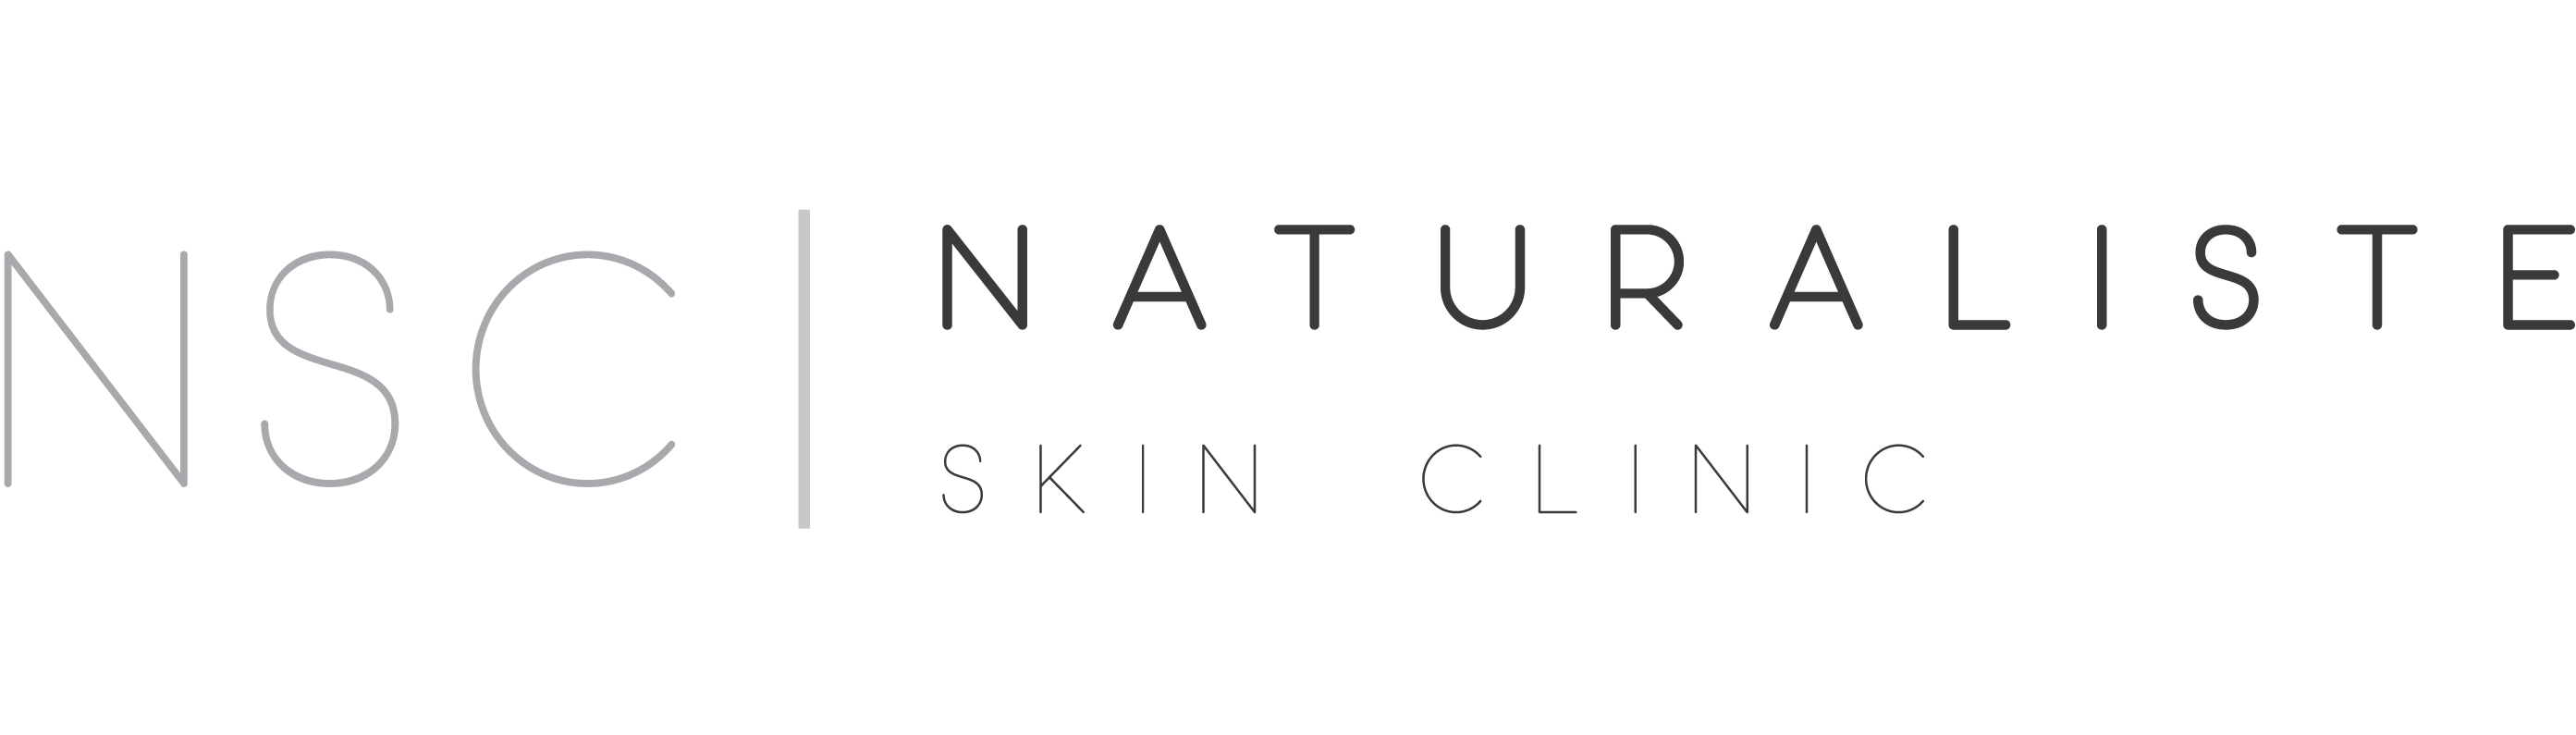 Naturaliste Skin Clinic Logo